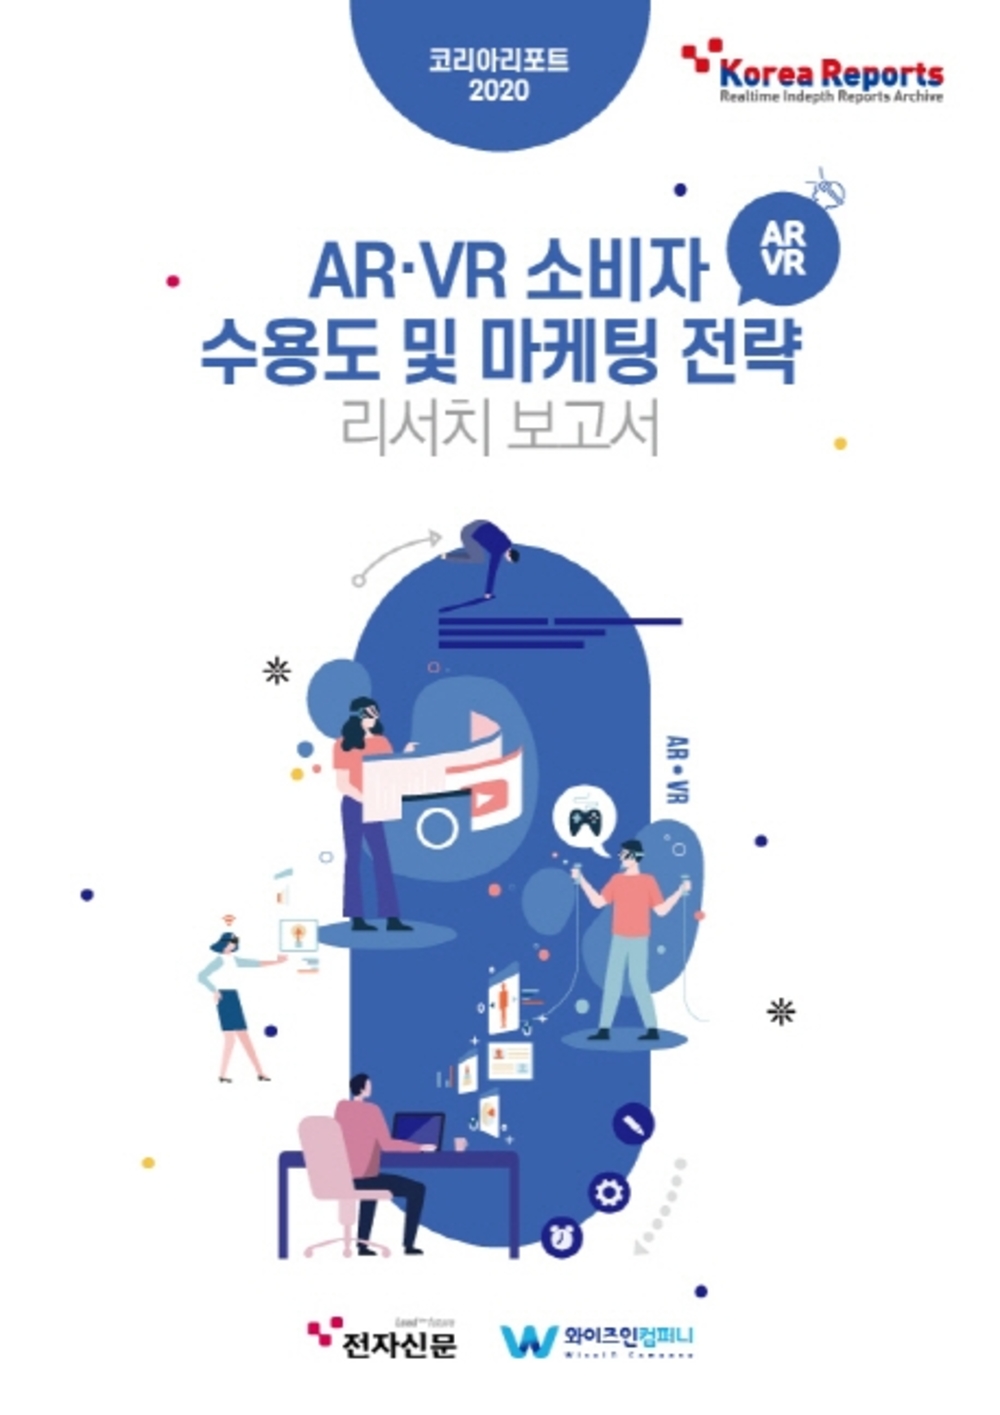 AR VR 소비자 수용도 및 마케팅 전략 리서치보고서